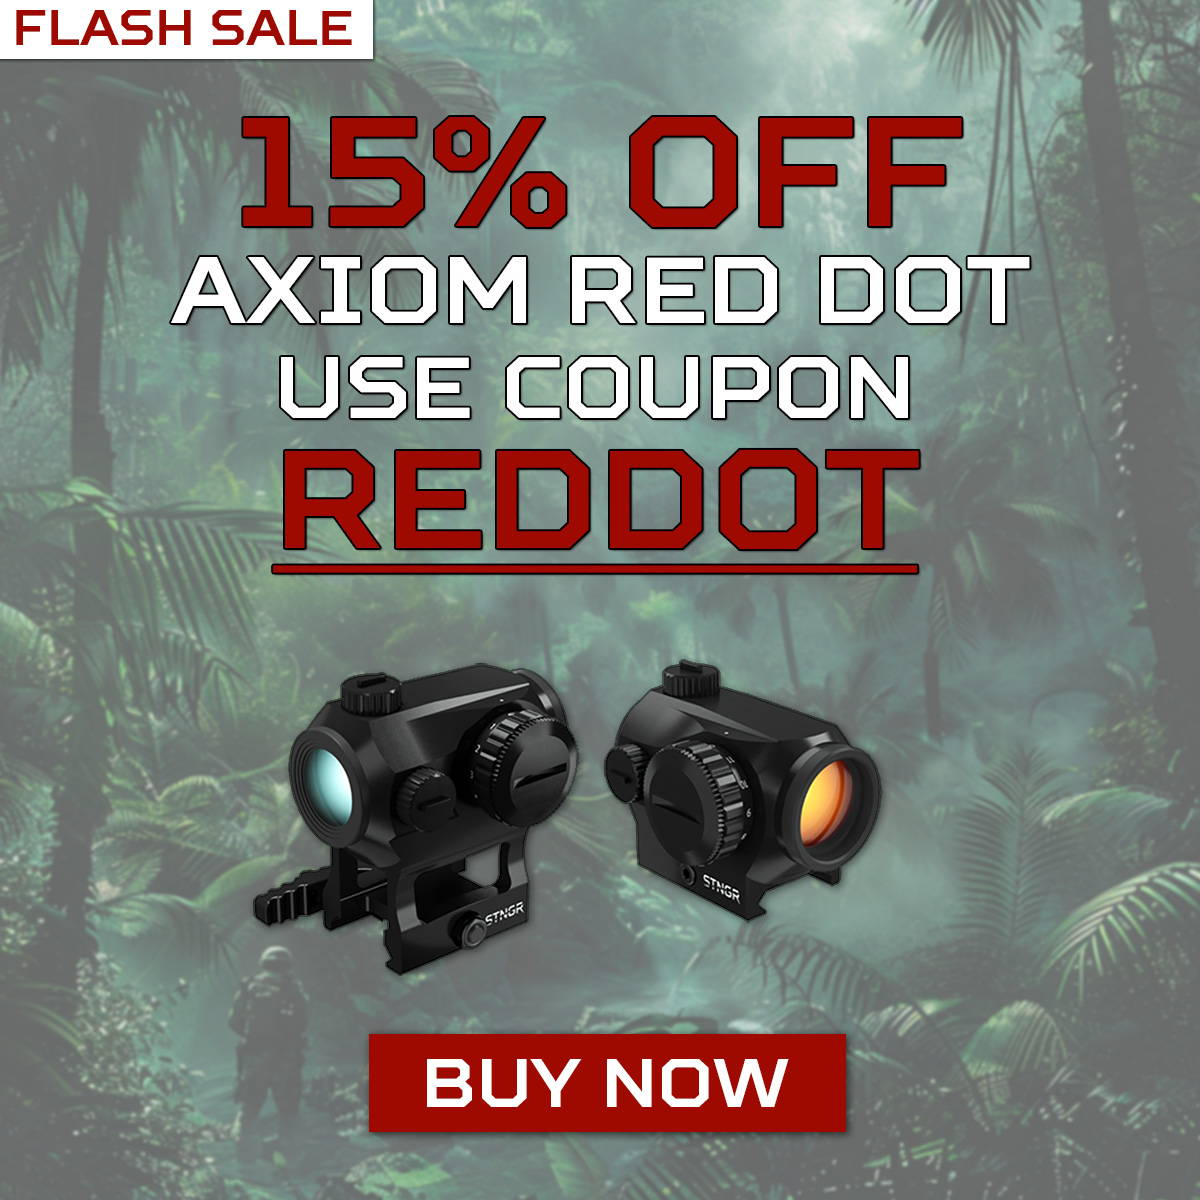 Save 15% on Axiom Red Dot - Use Coupon Code REDDOT